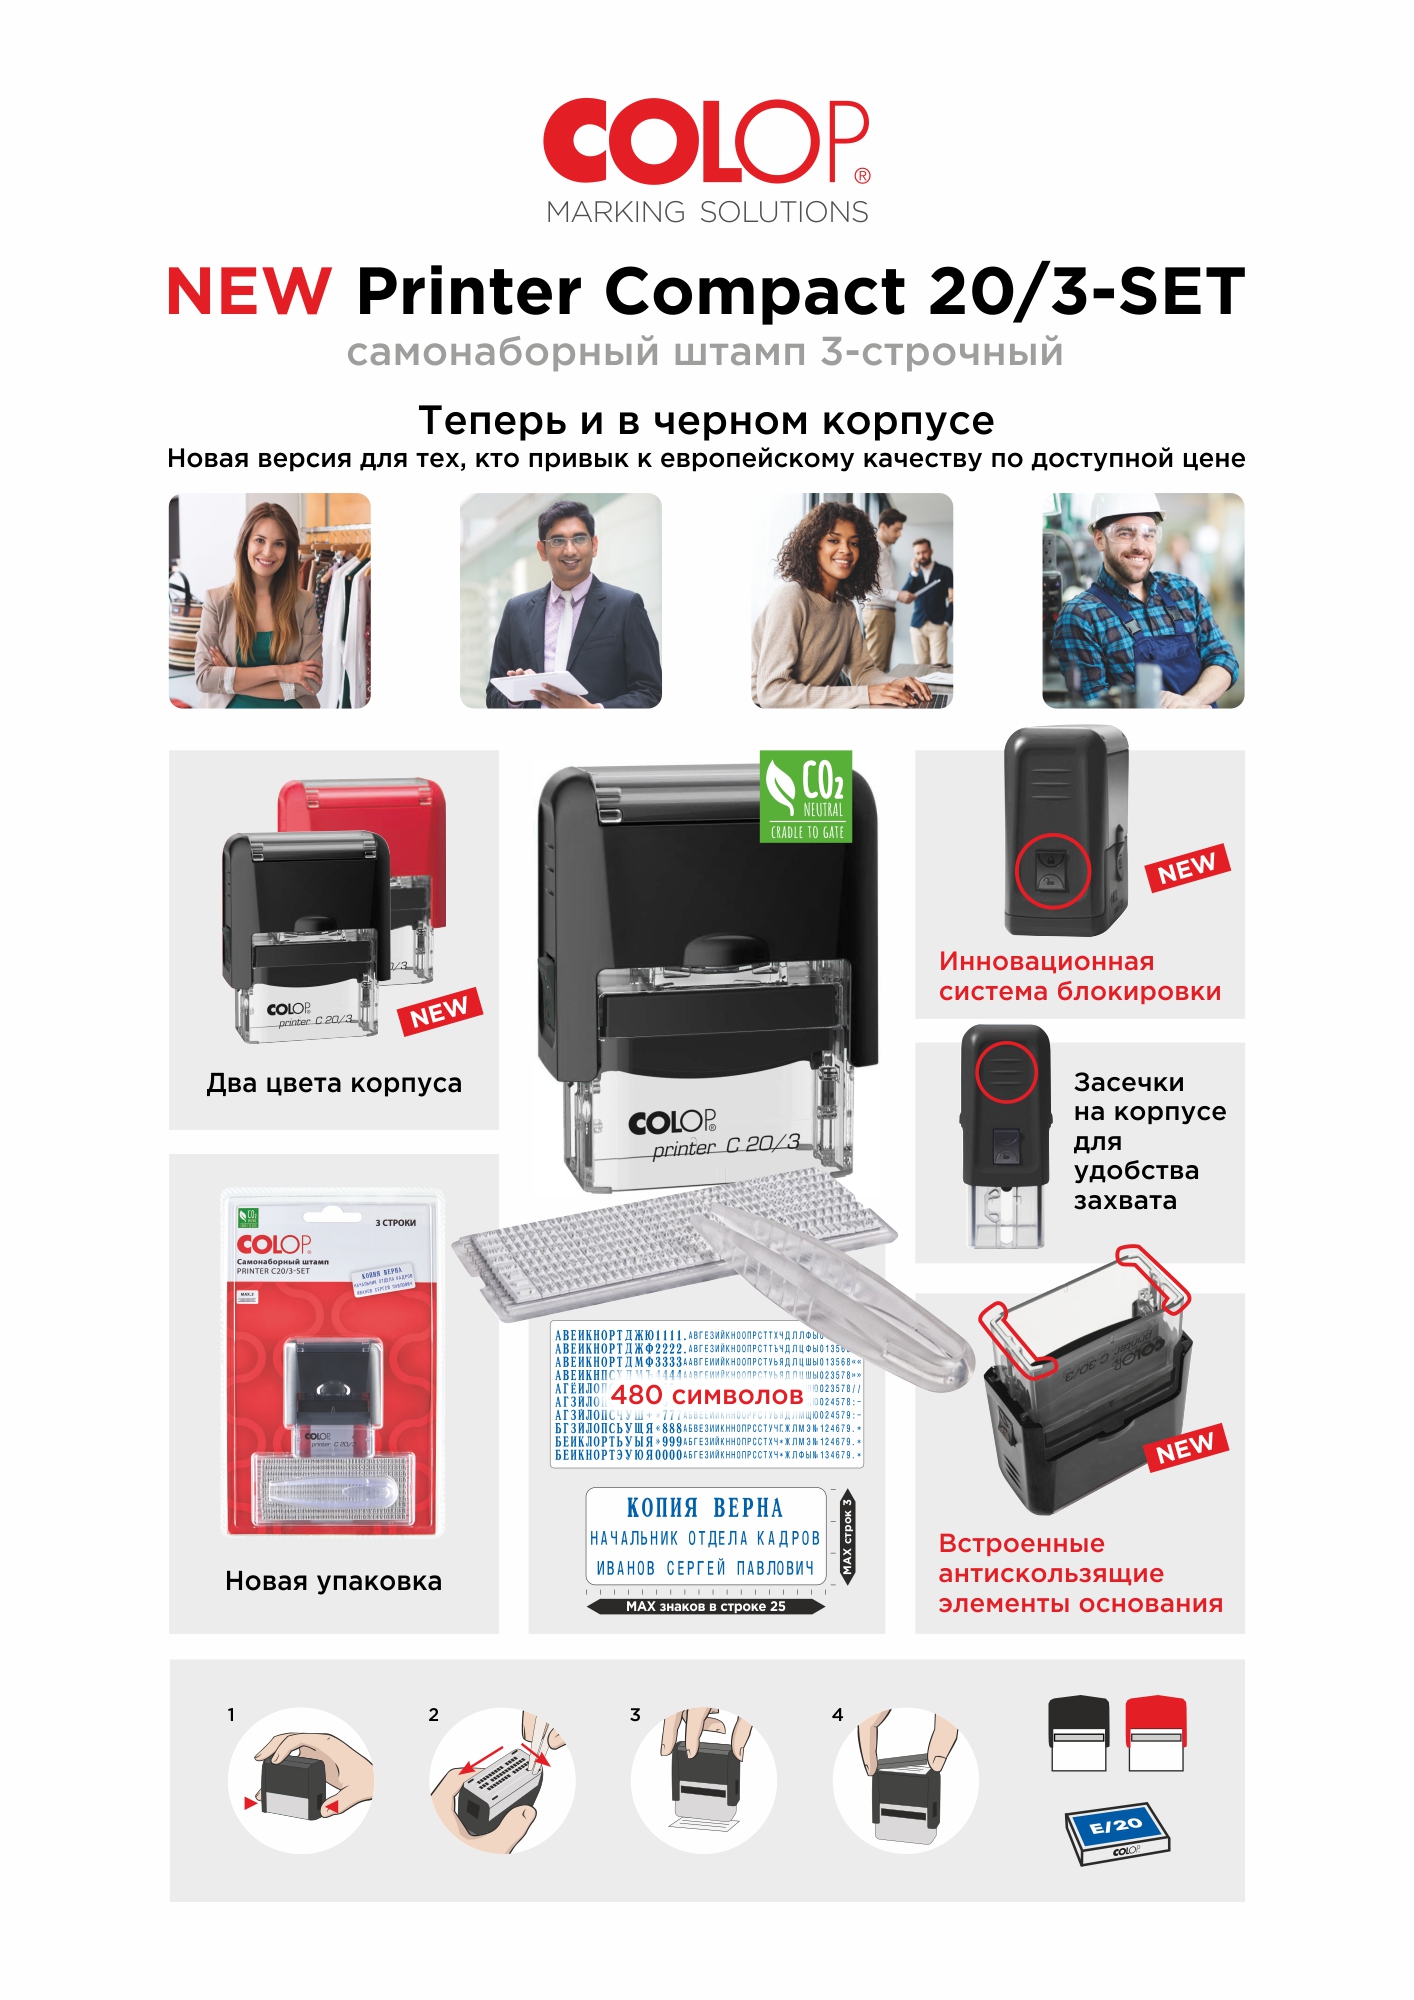 NEW Colop Printer C20/3 Set Compact